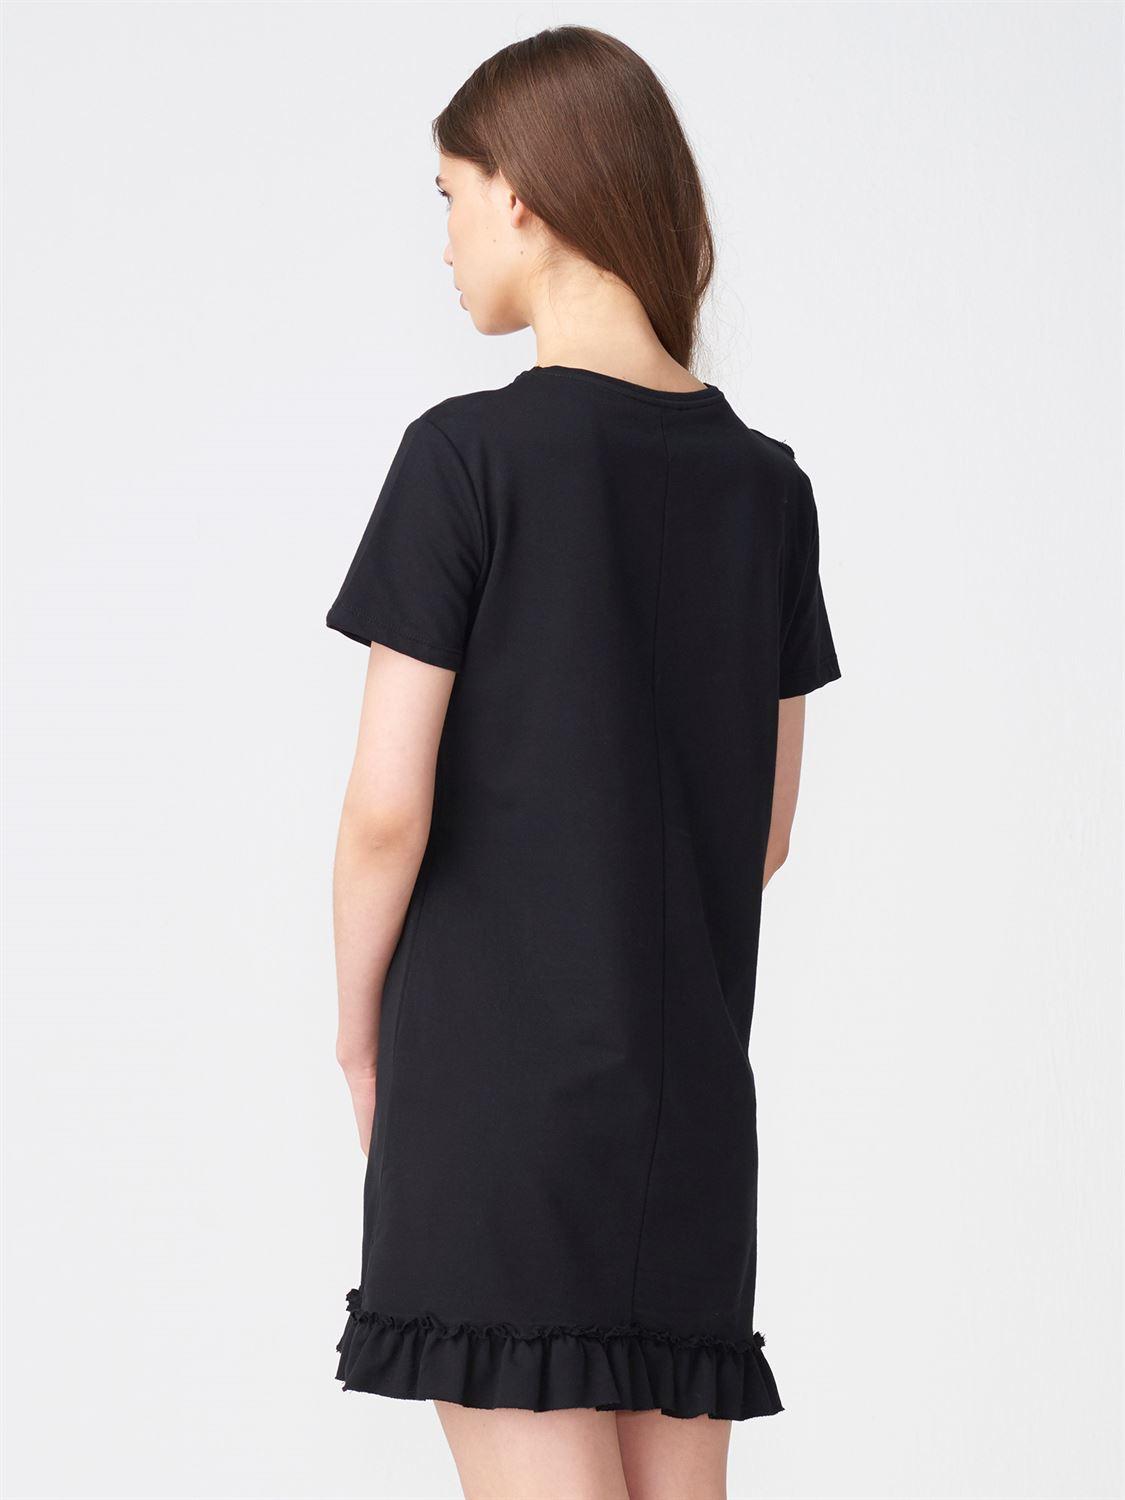 9804 Fırfır Detaylı Penye Elbise-Siyah